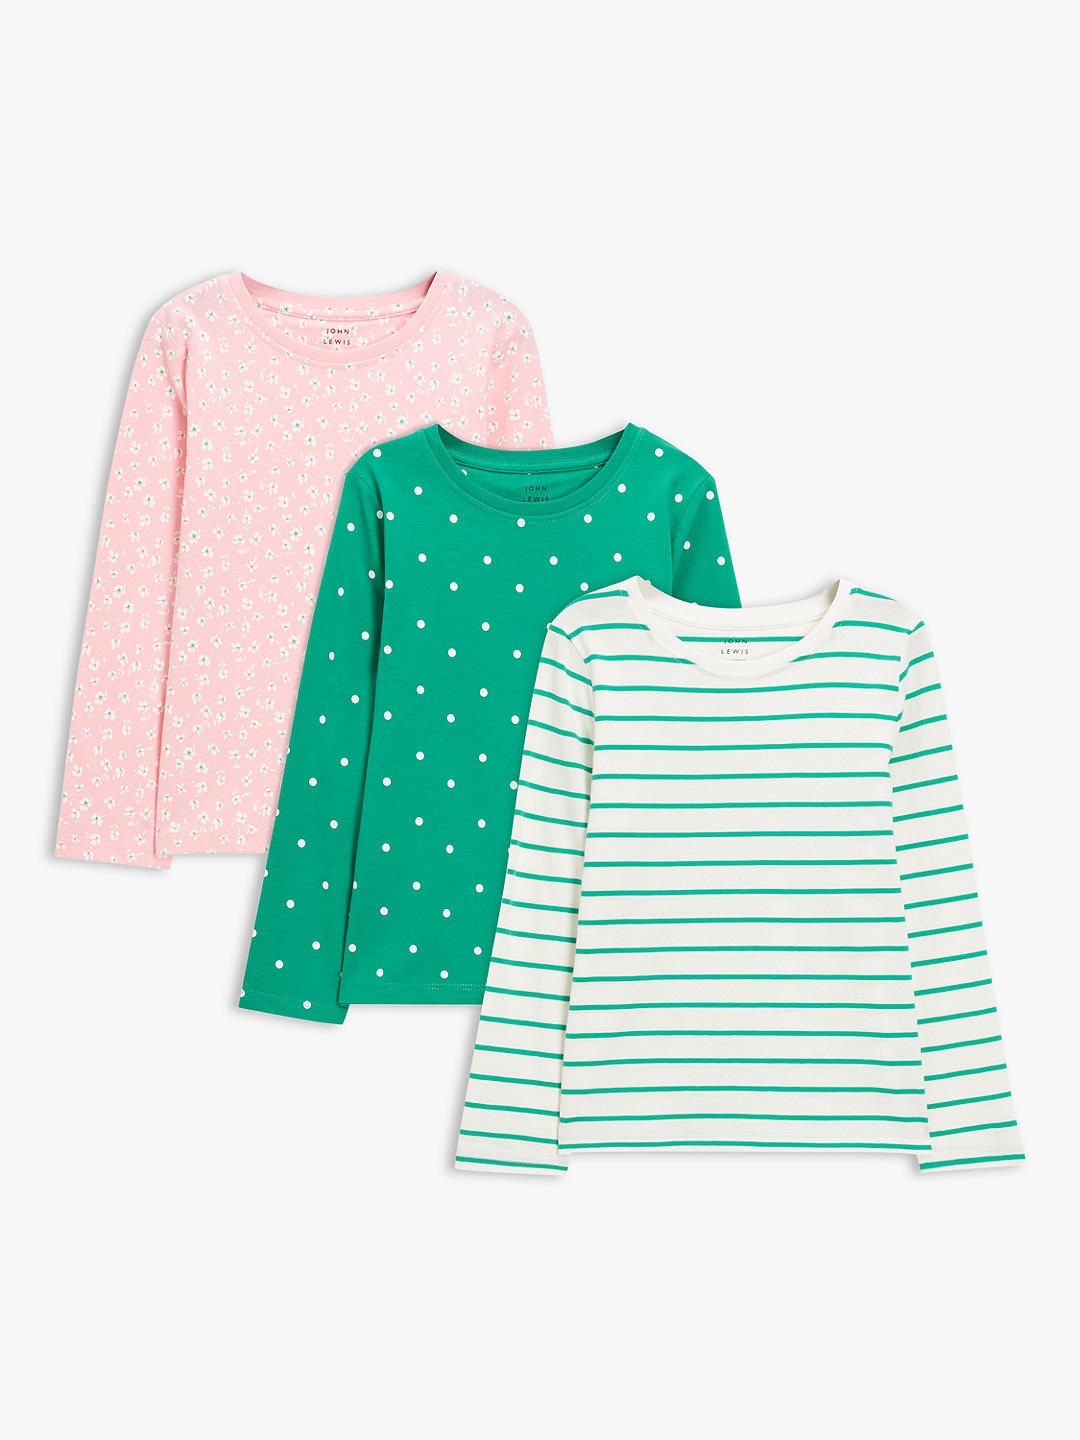 John Lewis Kids' Floral/Spot/Stripe Jersey Tops, Pack of 3, Pink/Green